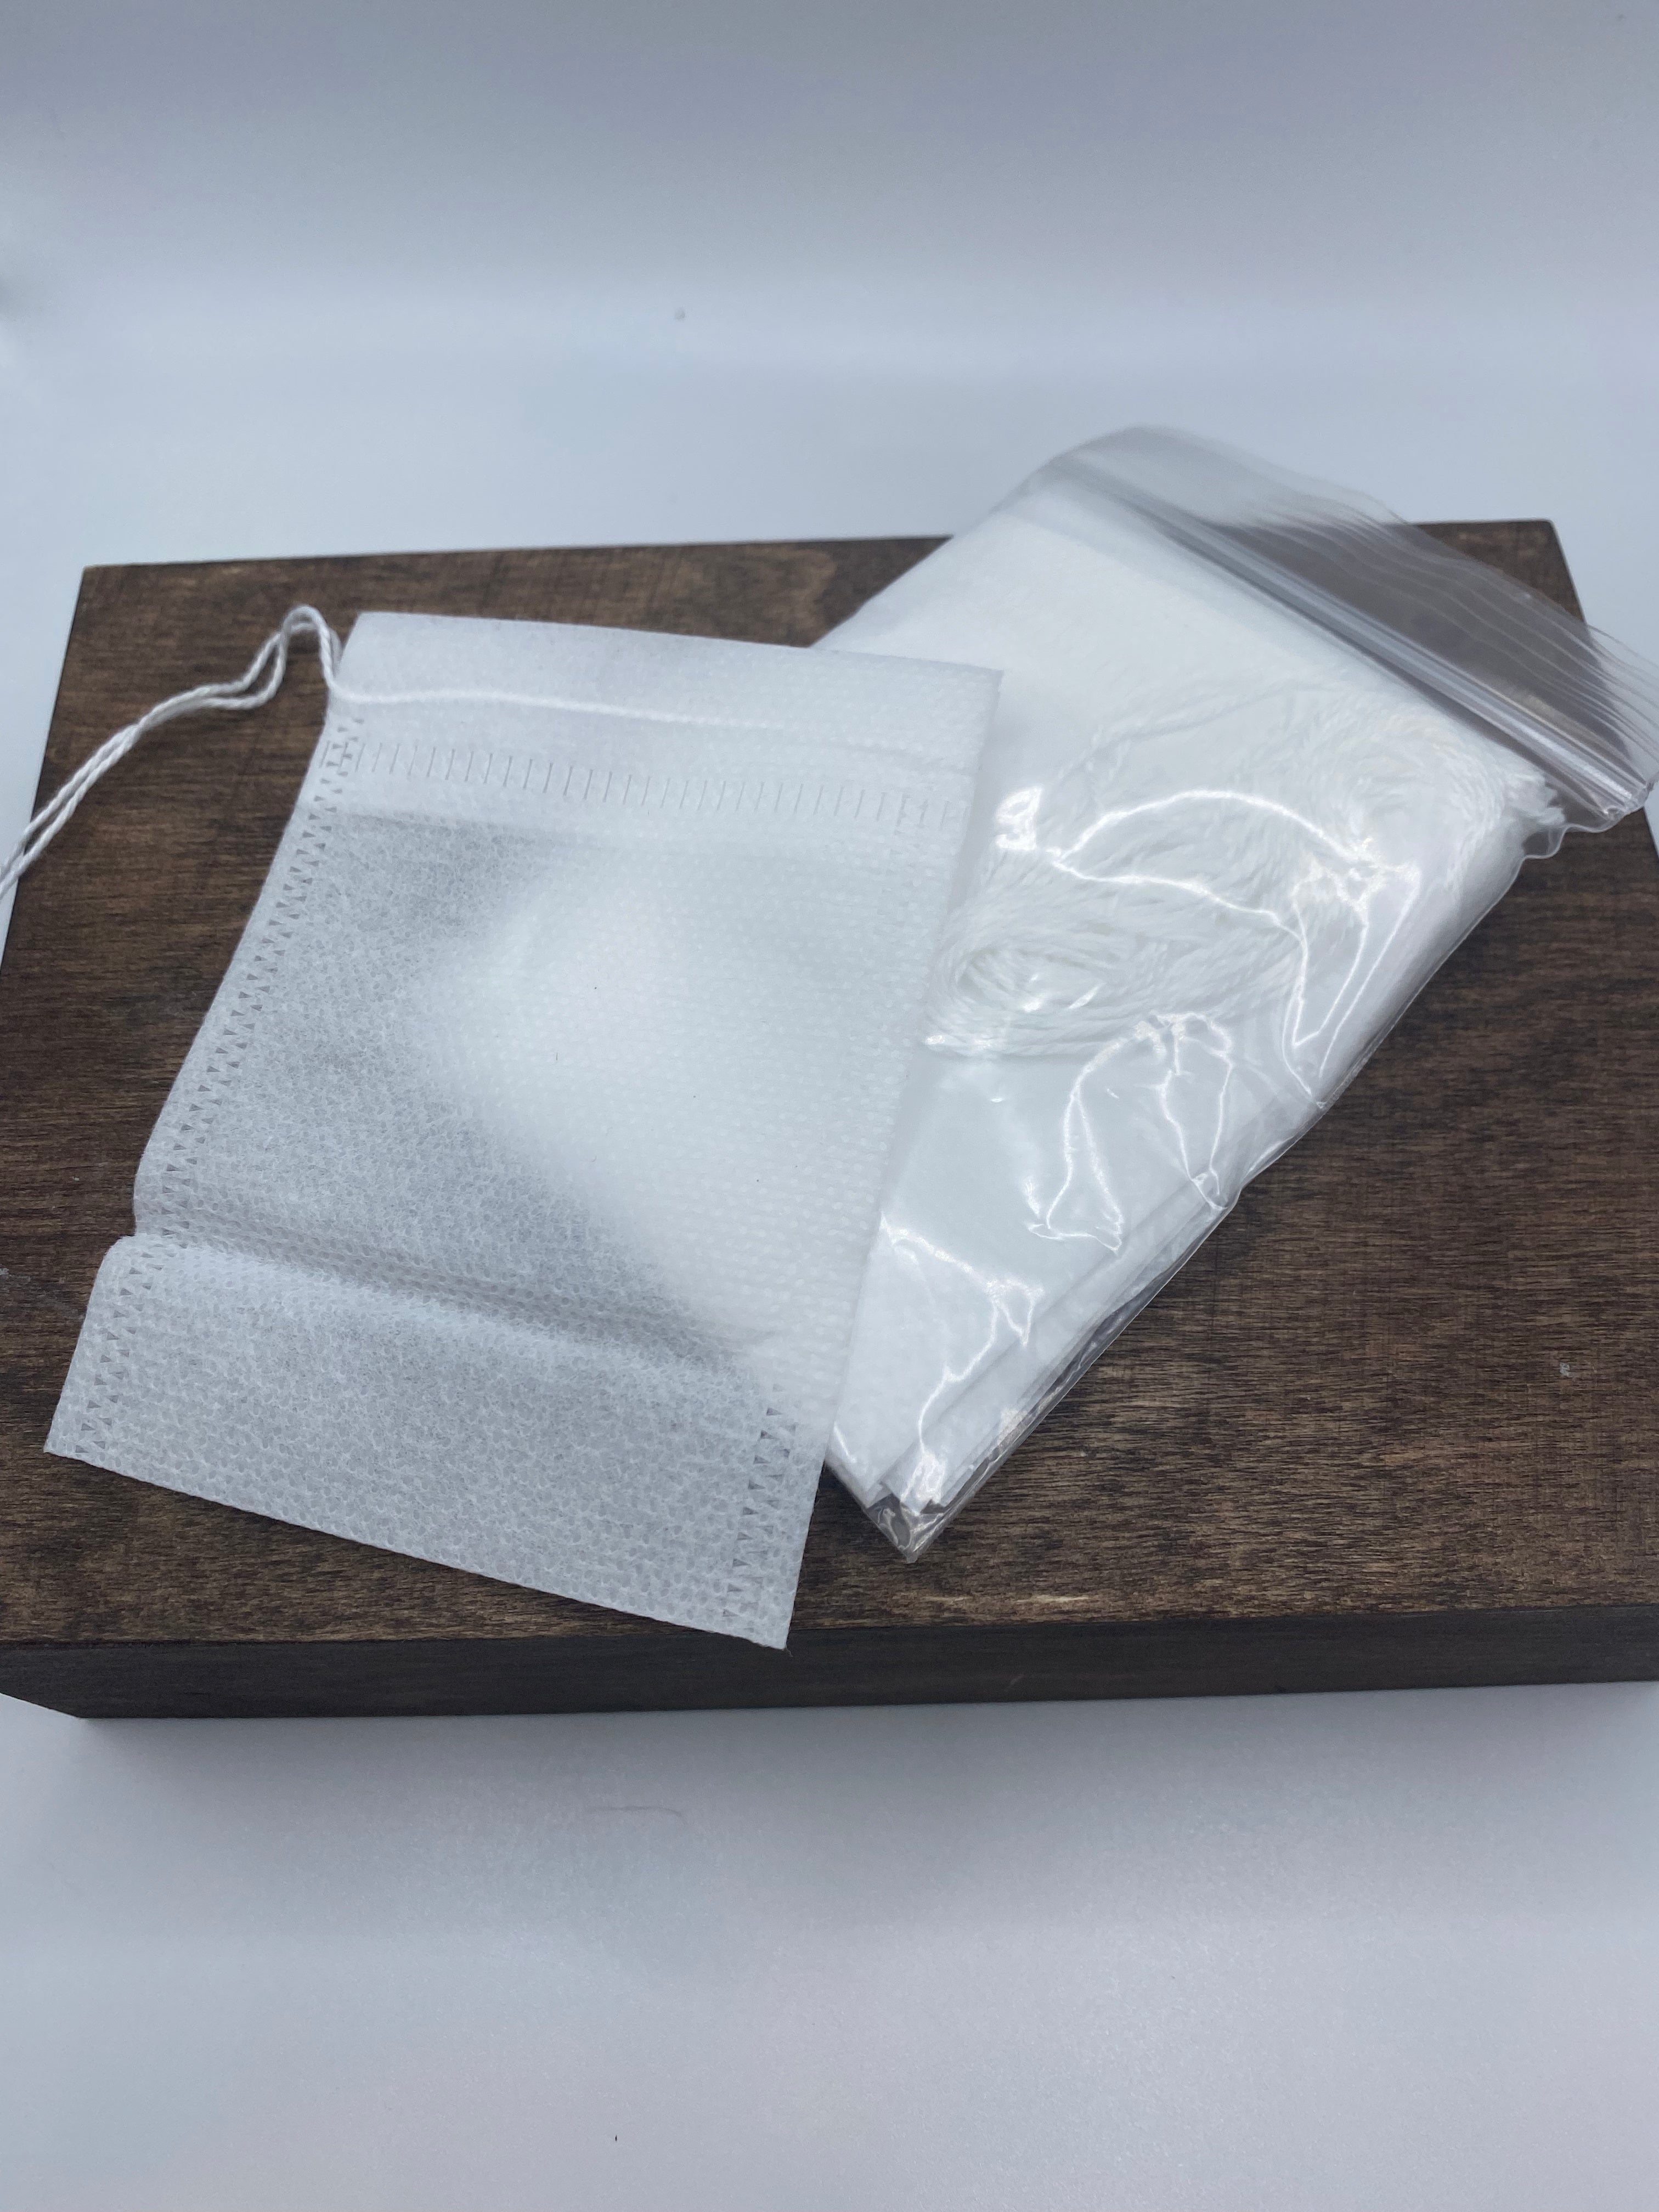 Custom Printed Empty Nylon Pyramid Tea Bags Empty Tea Filter Bag for Sale -  China Tea Filter Bag, High Quality Filter Bag | Made-in-China.com